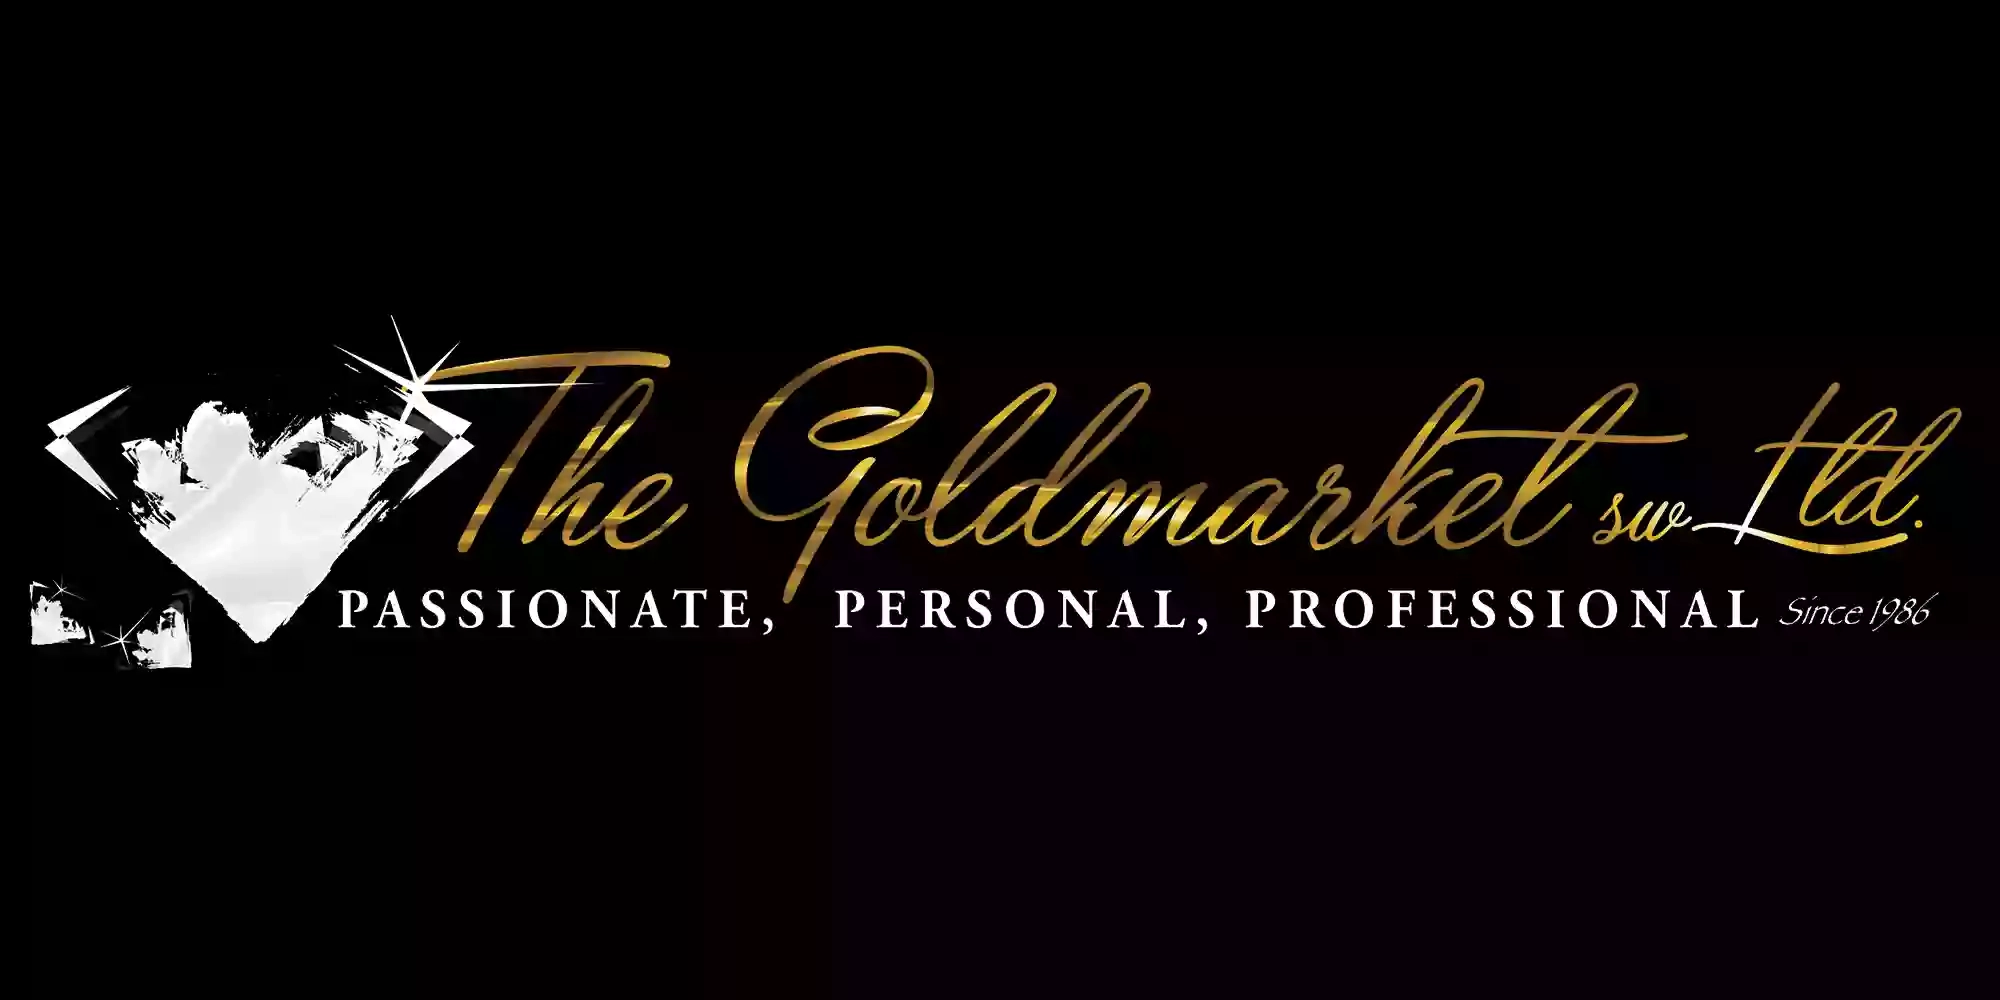 The Goldmarket